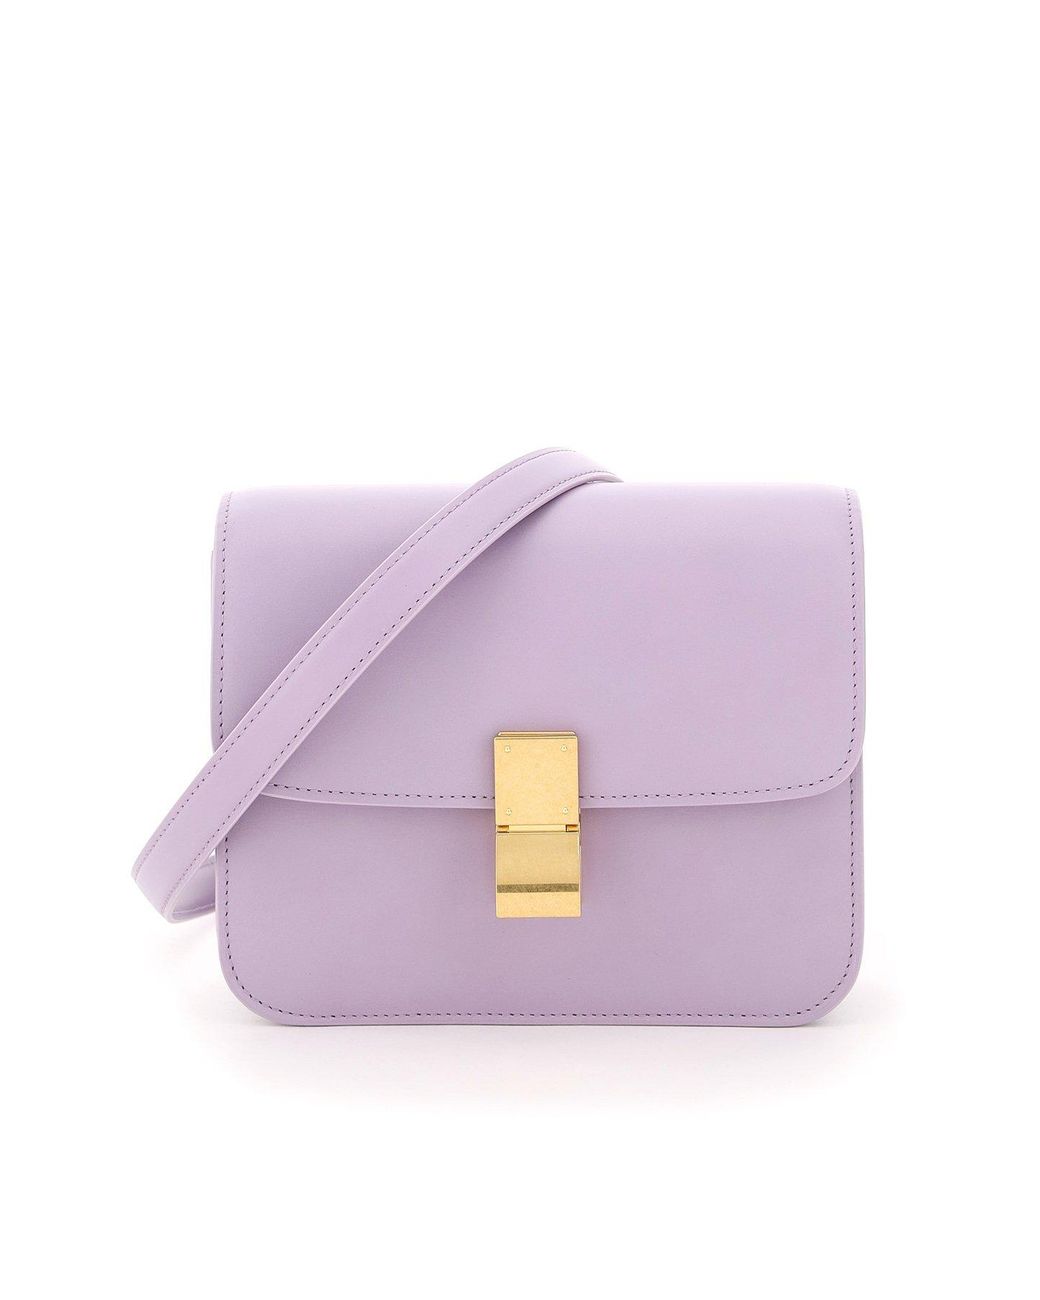 Celine Leather Teen Classic Bag in Purple - Lyst